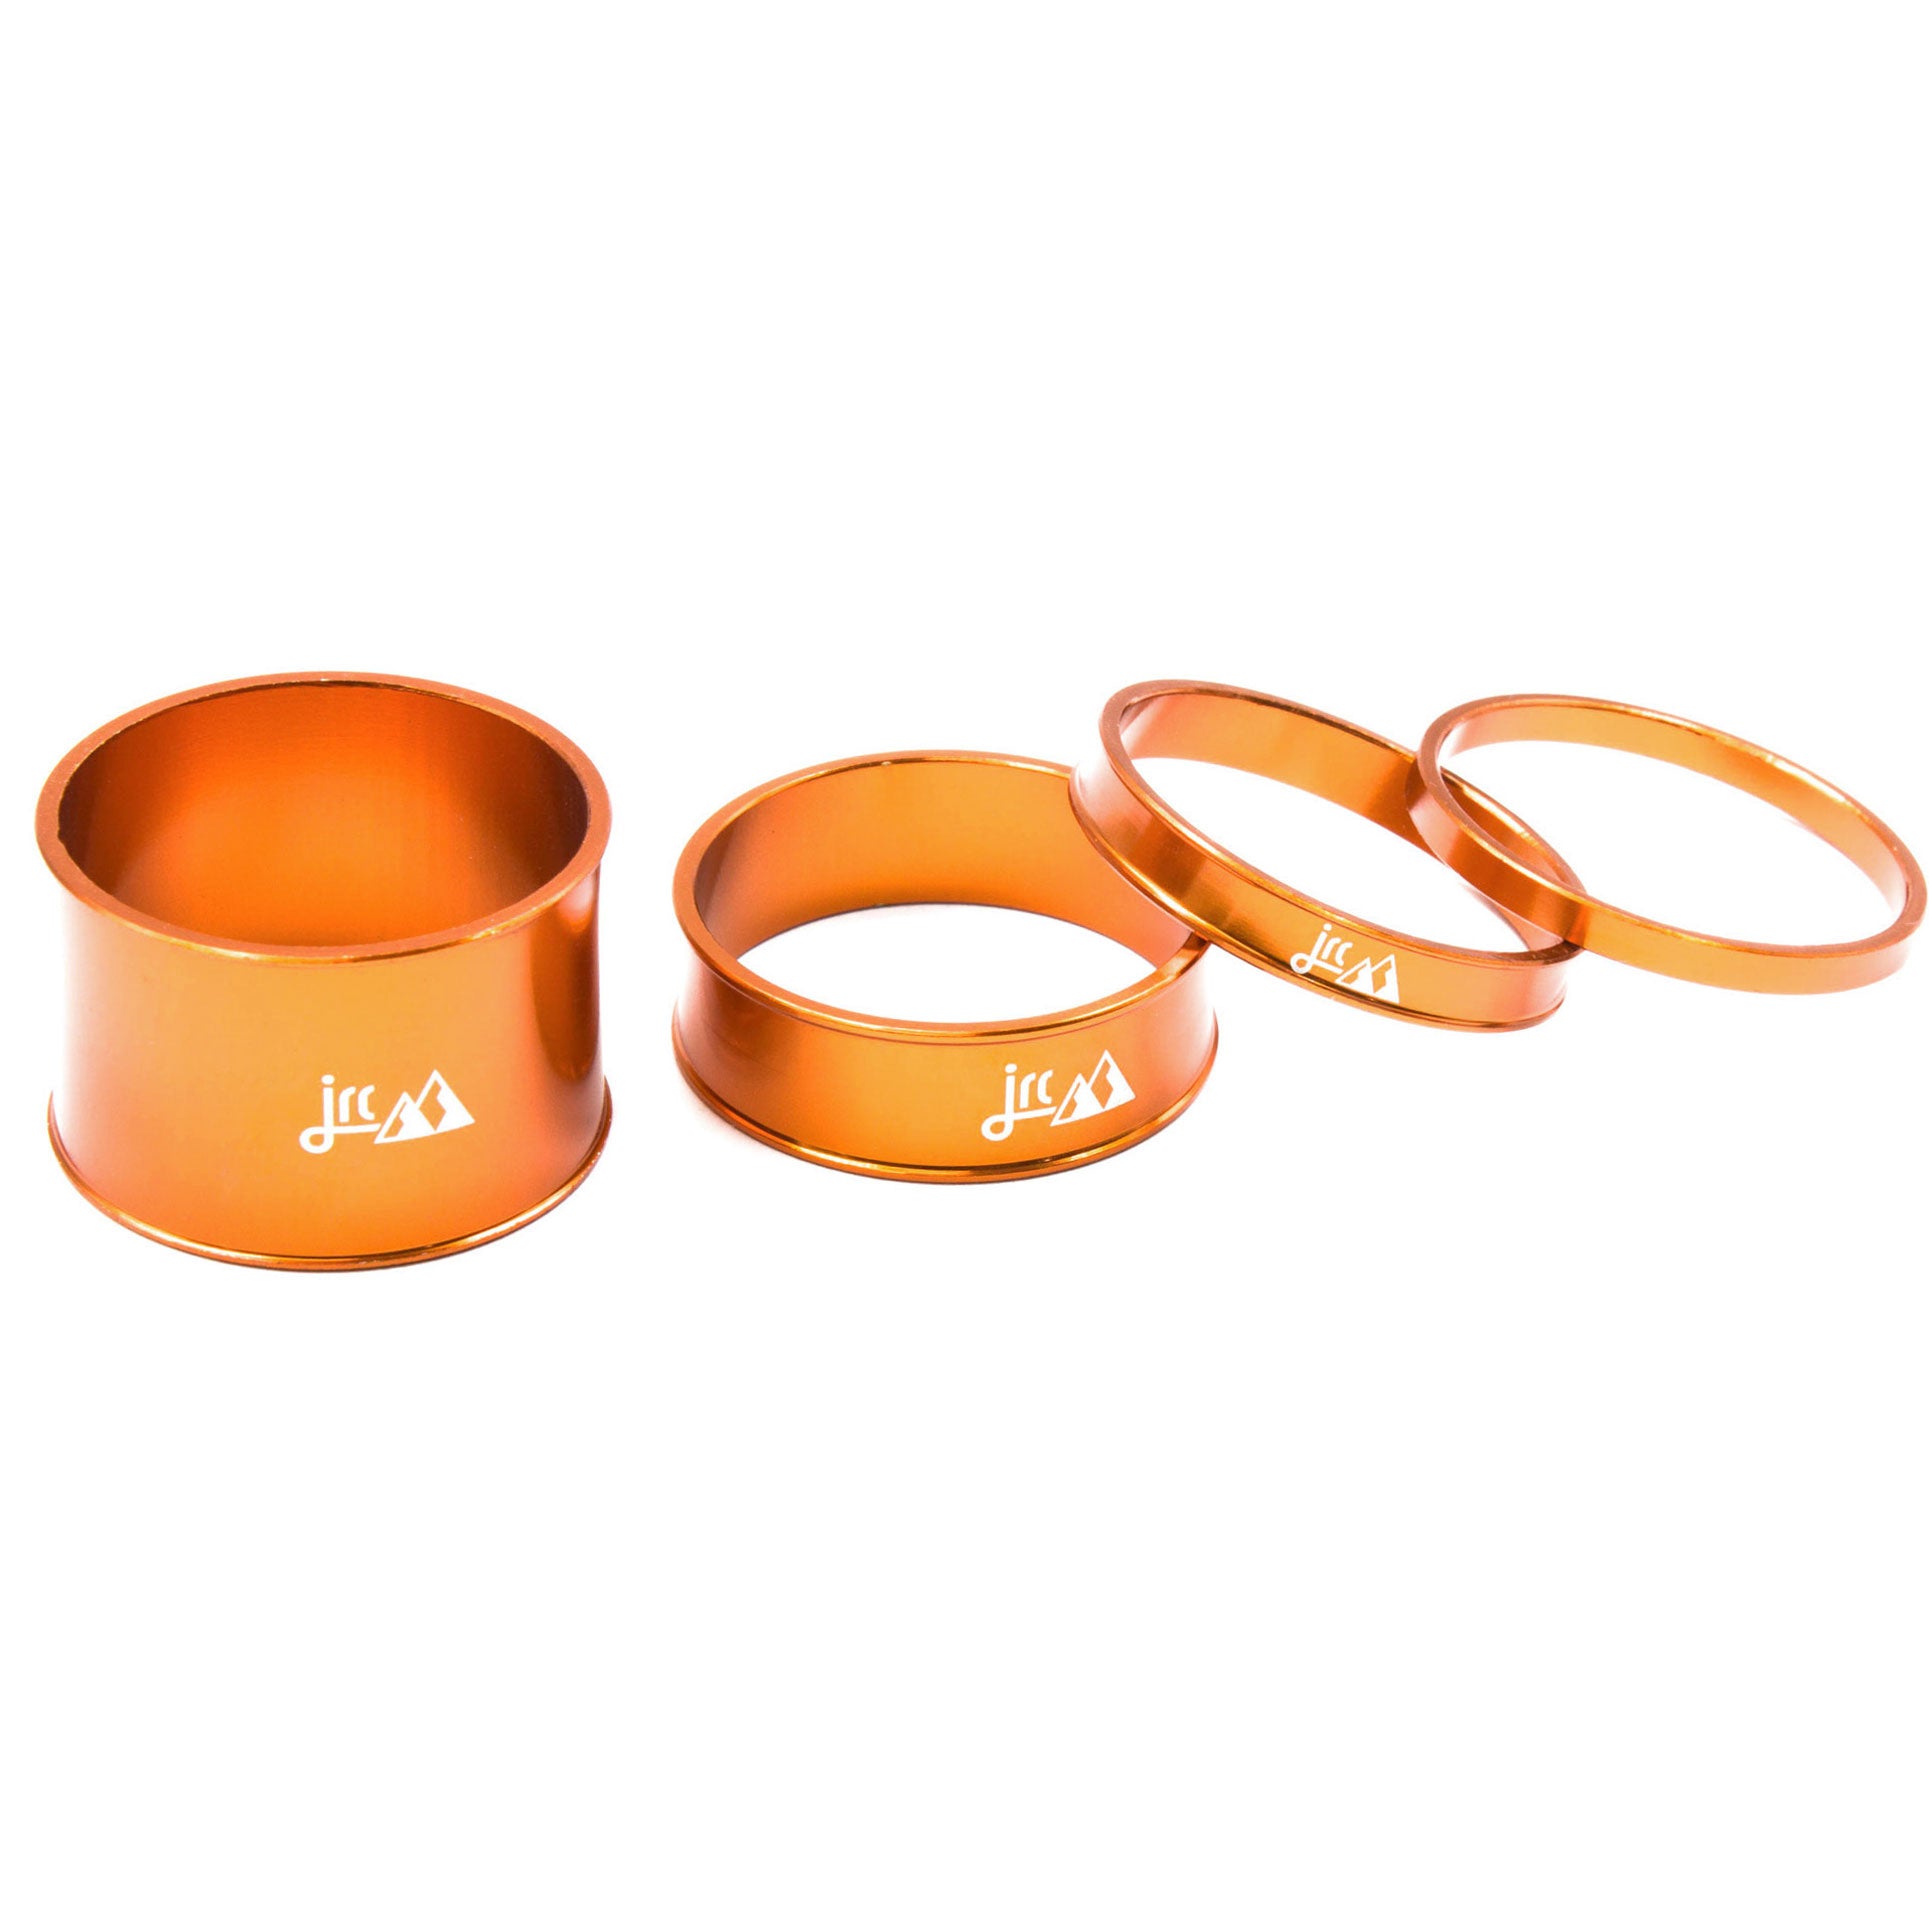 Orange, lightweight aluminium bicycle headset spacer kit with 4 sizes.